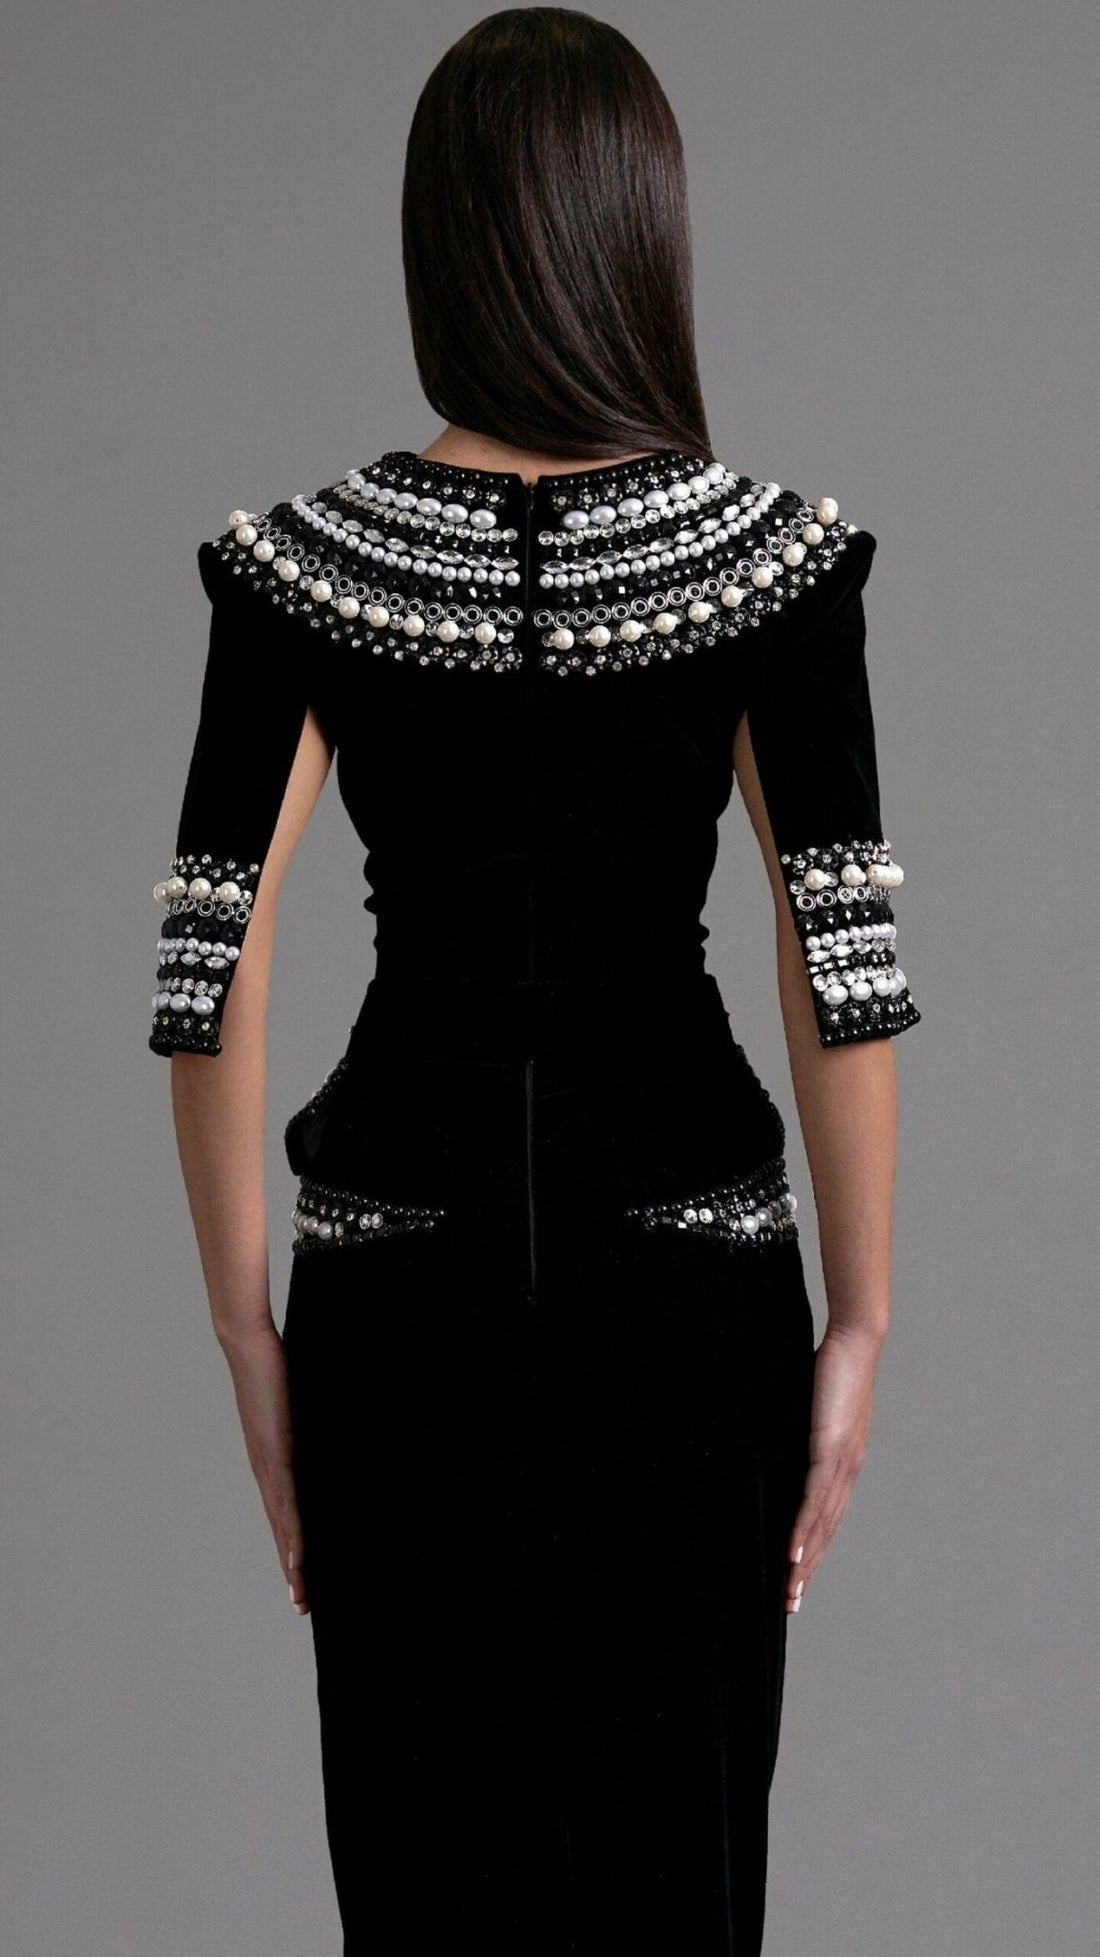 Regal Black Evening Gown with Embellished Accents - KUJTA & MERI - KUJTA & MERI